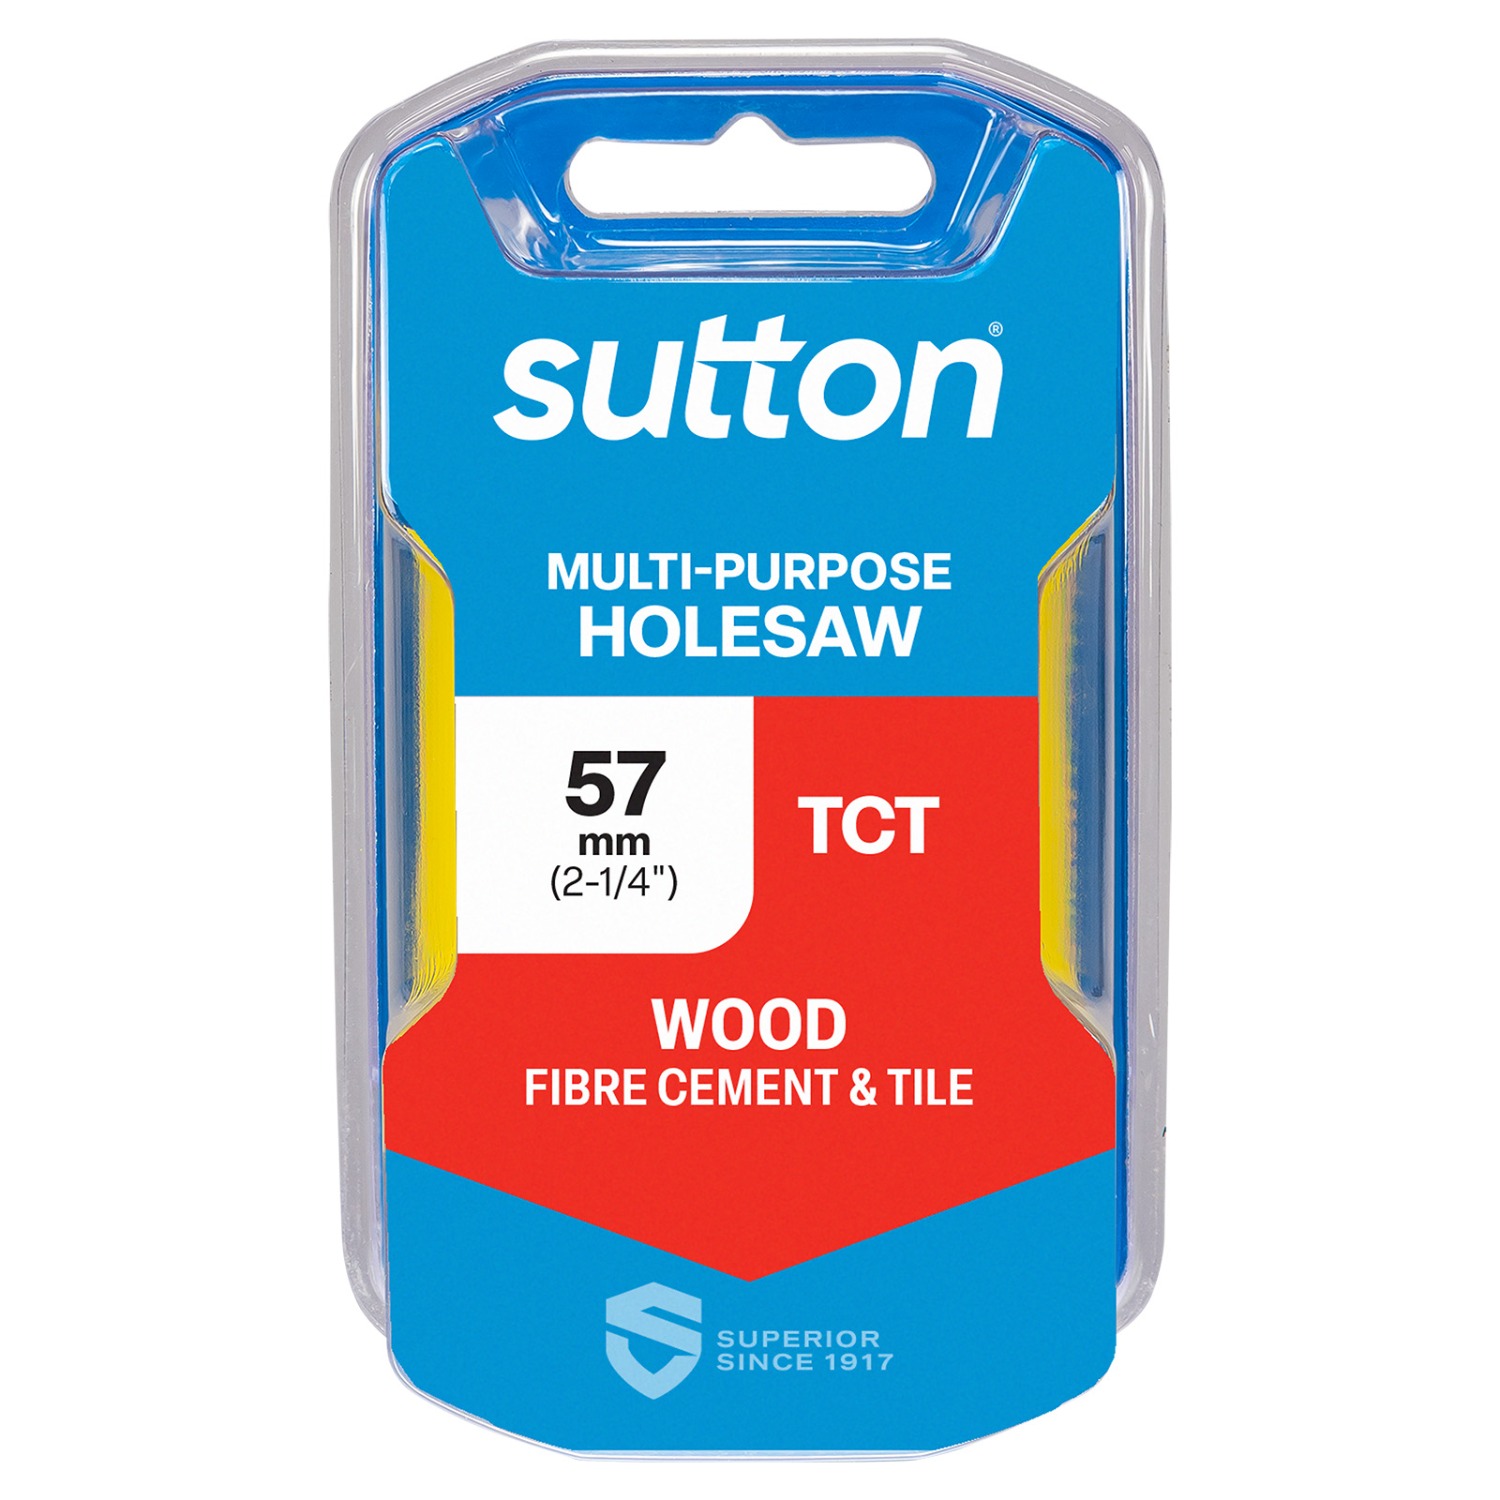 SUTTON 70mm FIBRE CEMENT ETC 2-3/4" TCT MULTI-PURPOSE HOLESAW FOR WOOD 